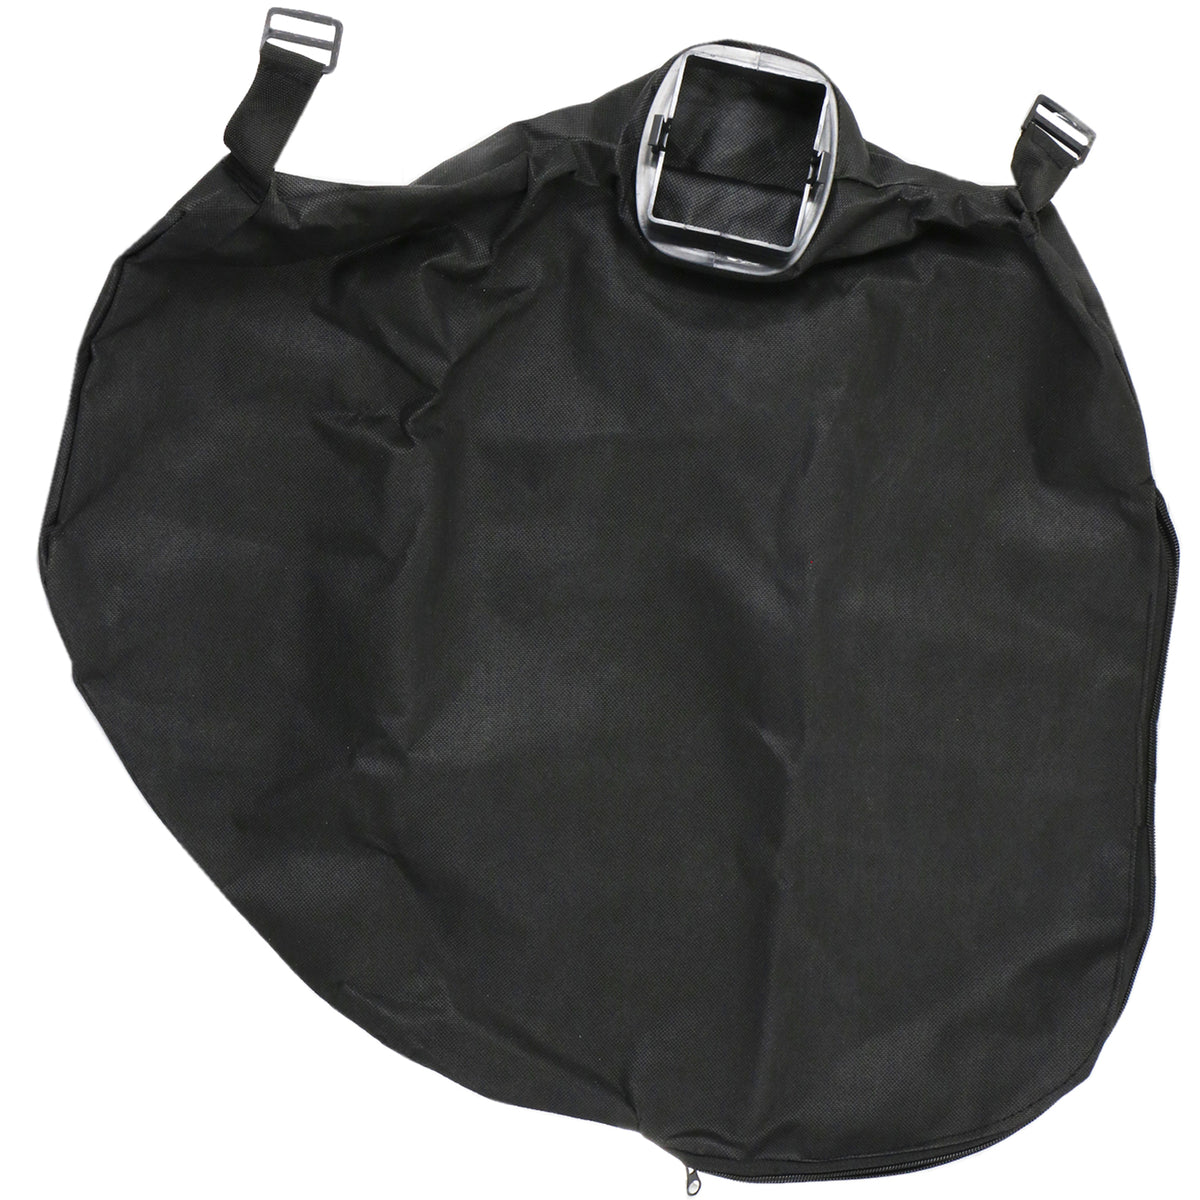 Black & Decker Leaf Collection Bag For Gw2200 Blower Vacs